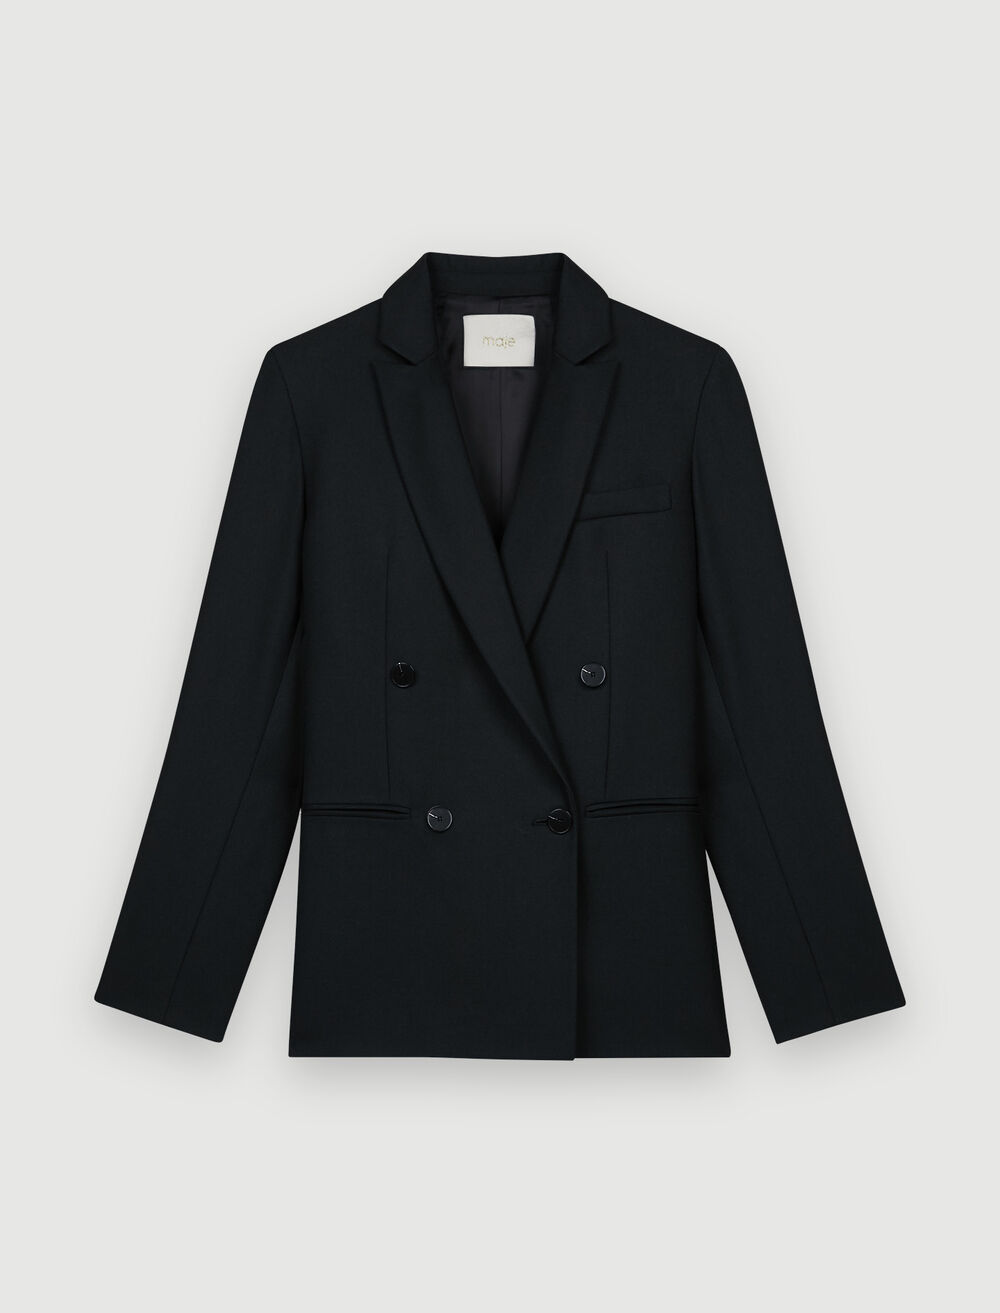 120VILA Black blazer - Coats & Jackets - Maje.com